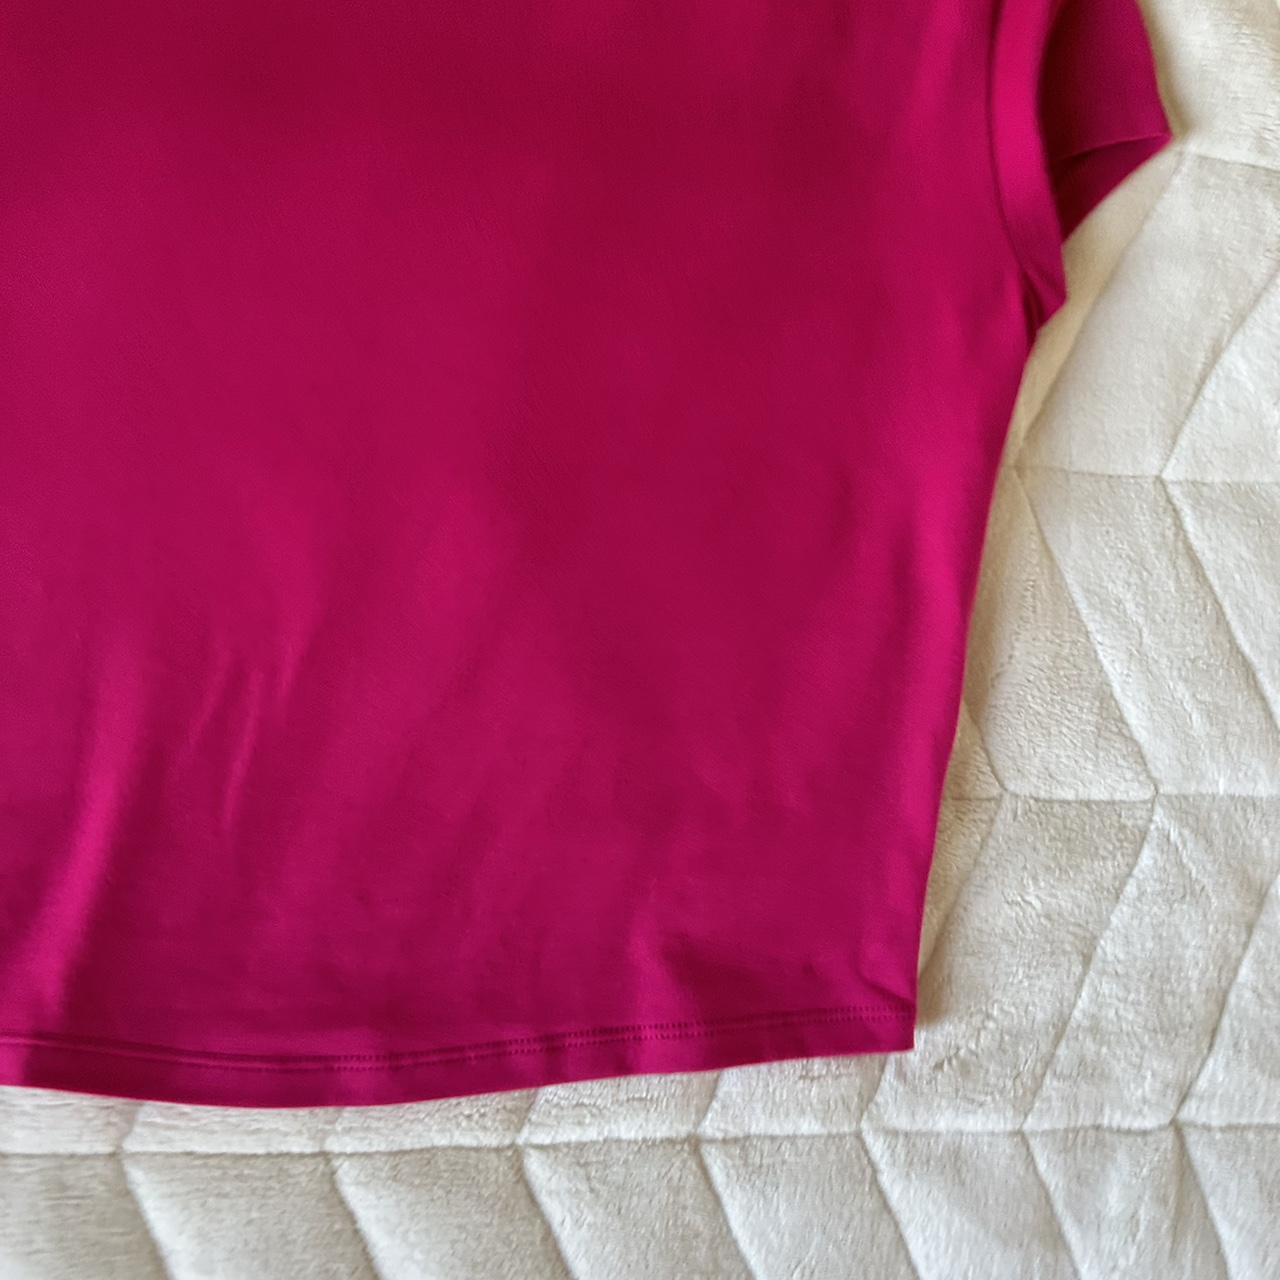 alo shirt 🩷🩷 #alo #aloyoga #pink #sporty #trendy - Depop